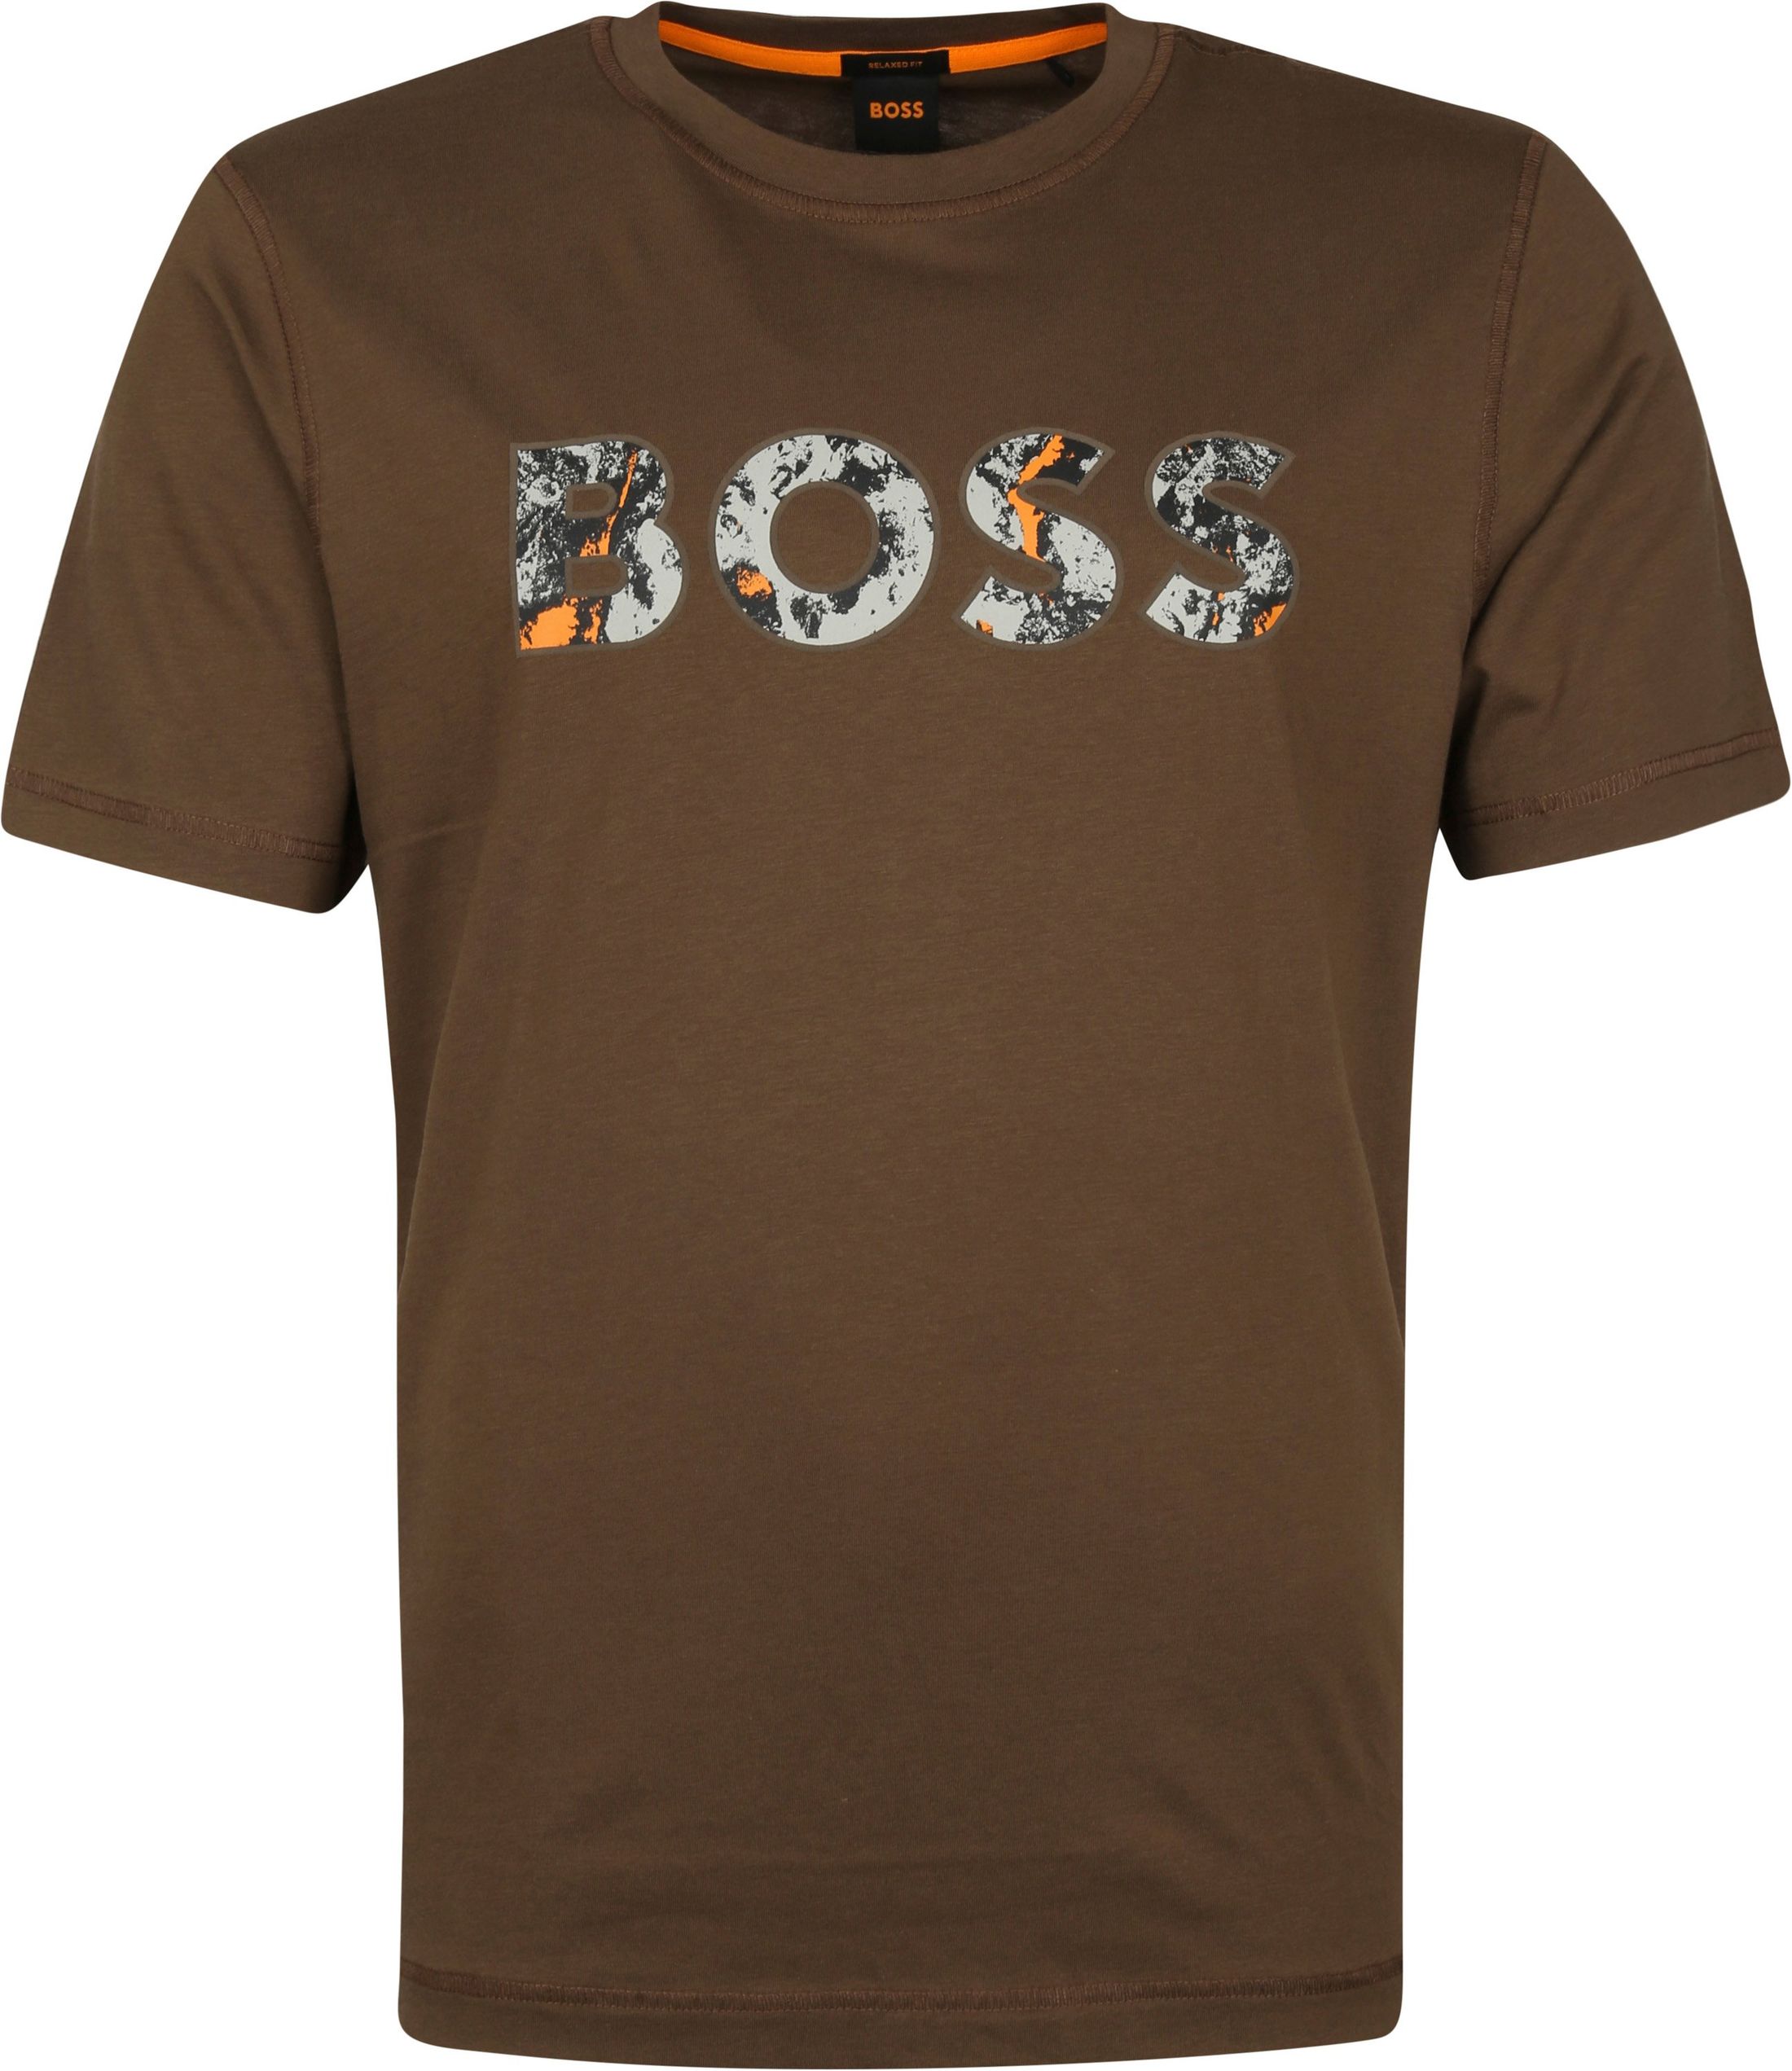 Hugo Boss T-shirt Teetrury Khaki size L